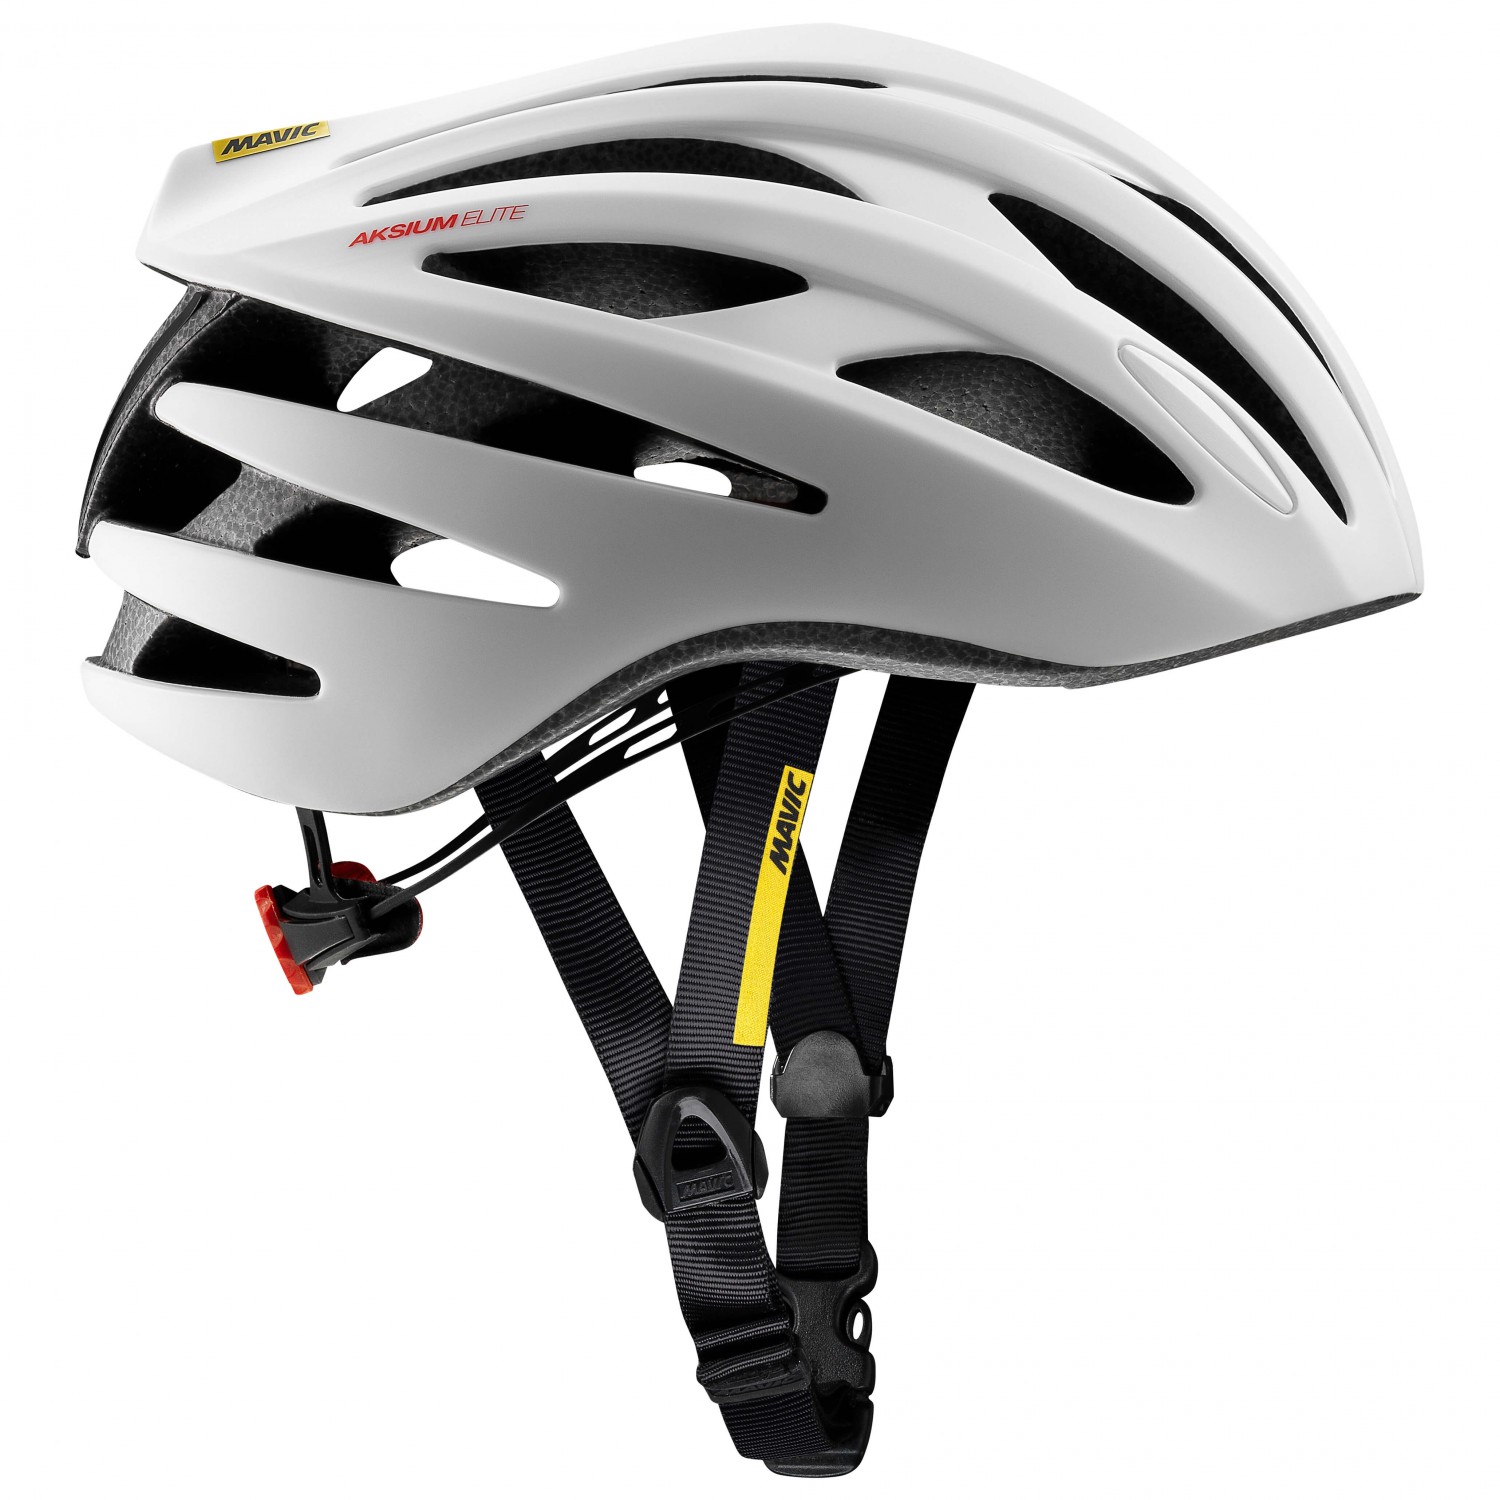 Велосипедный шлем Mavic Aksium Elite, цвет White/Black